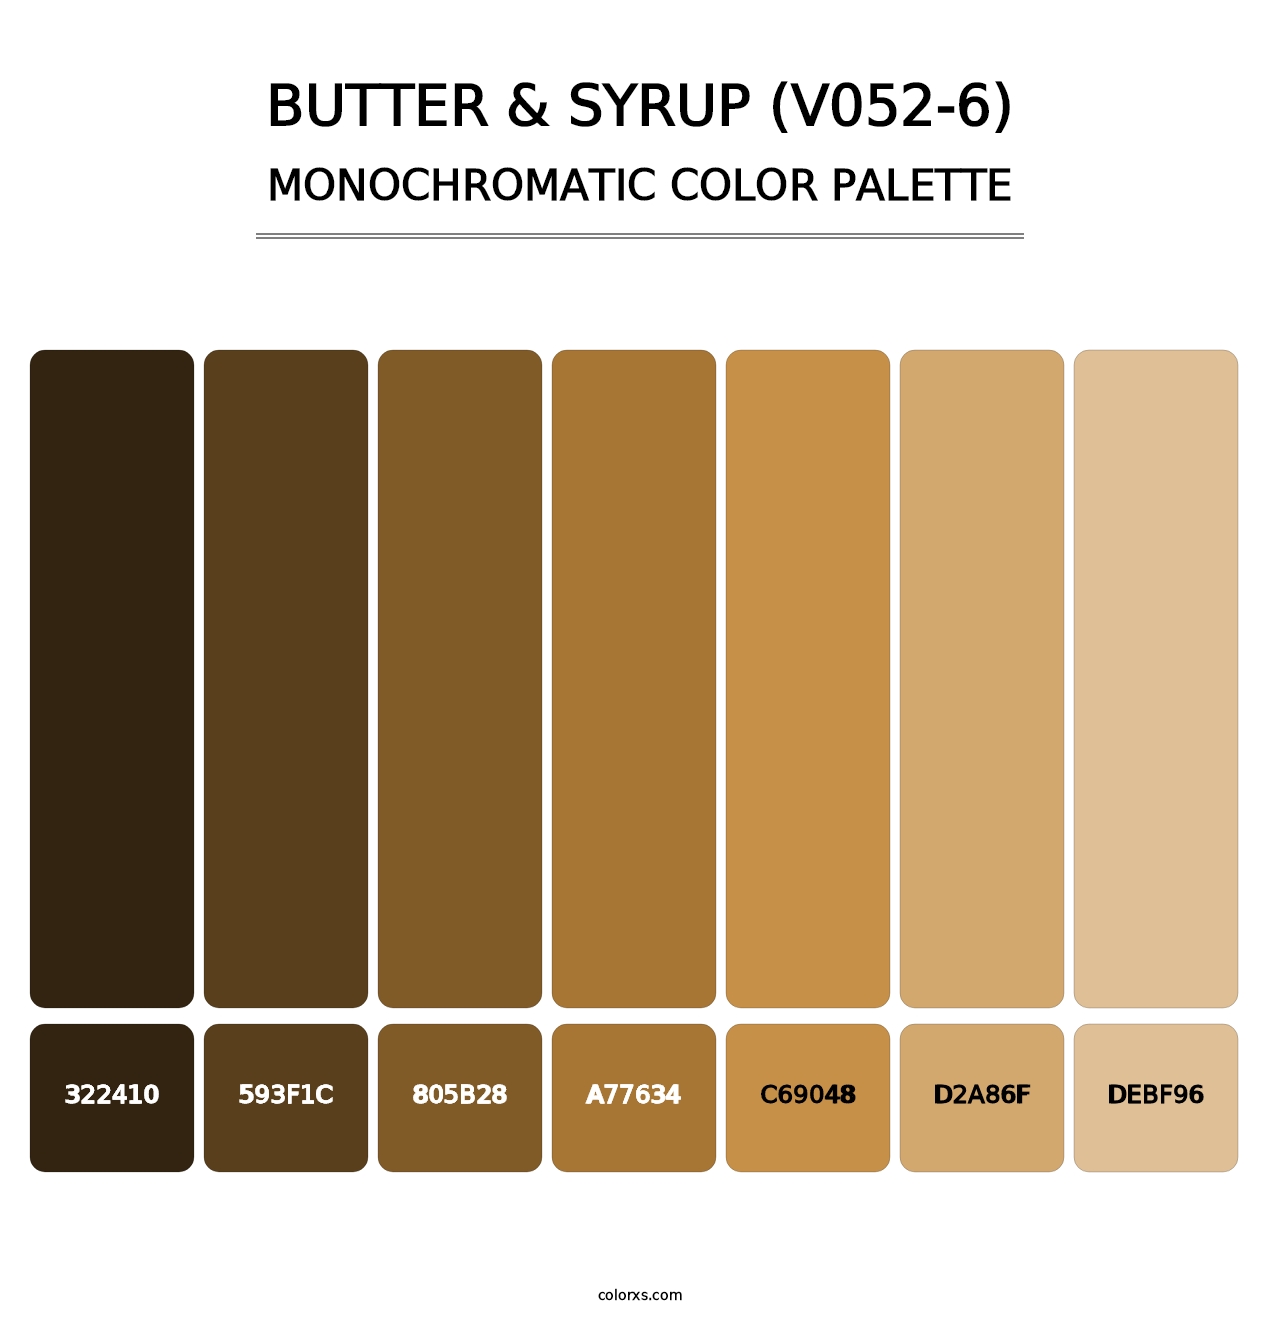 Butter & Syrup (V052-6) - Monochromatic Color Palette